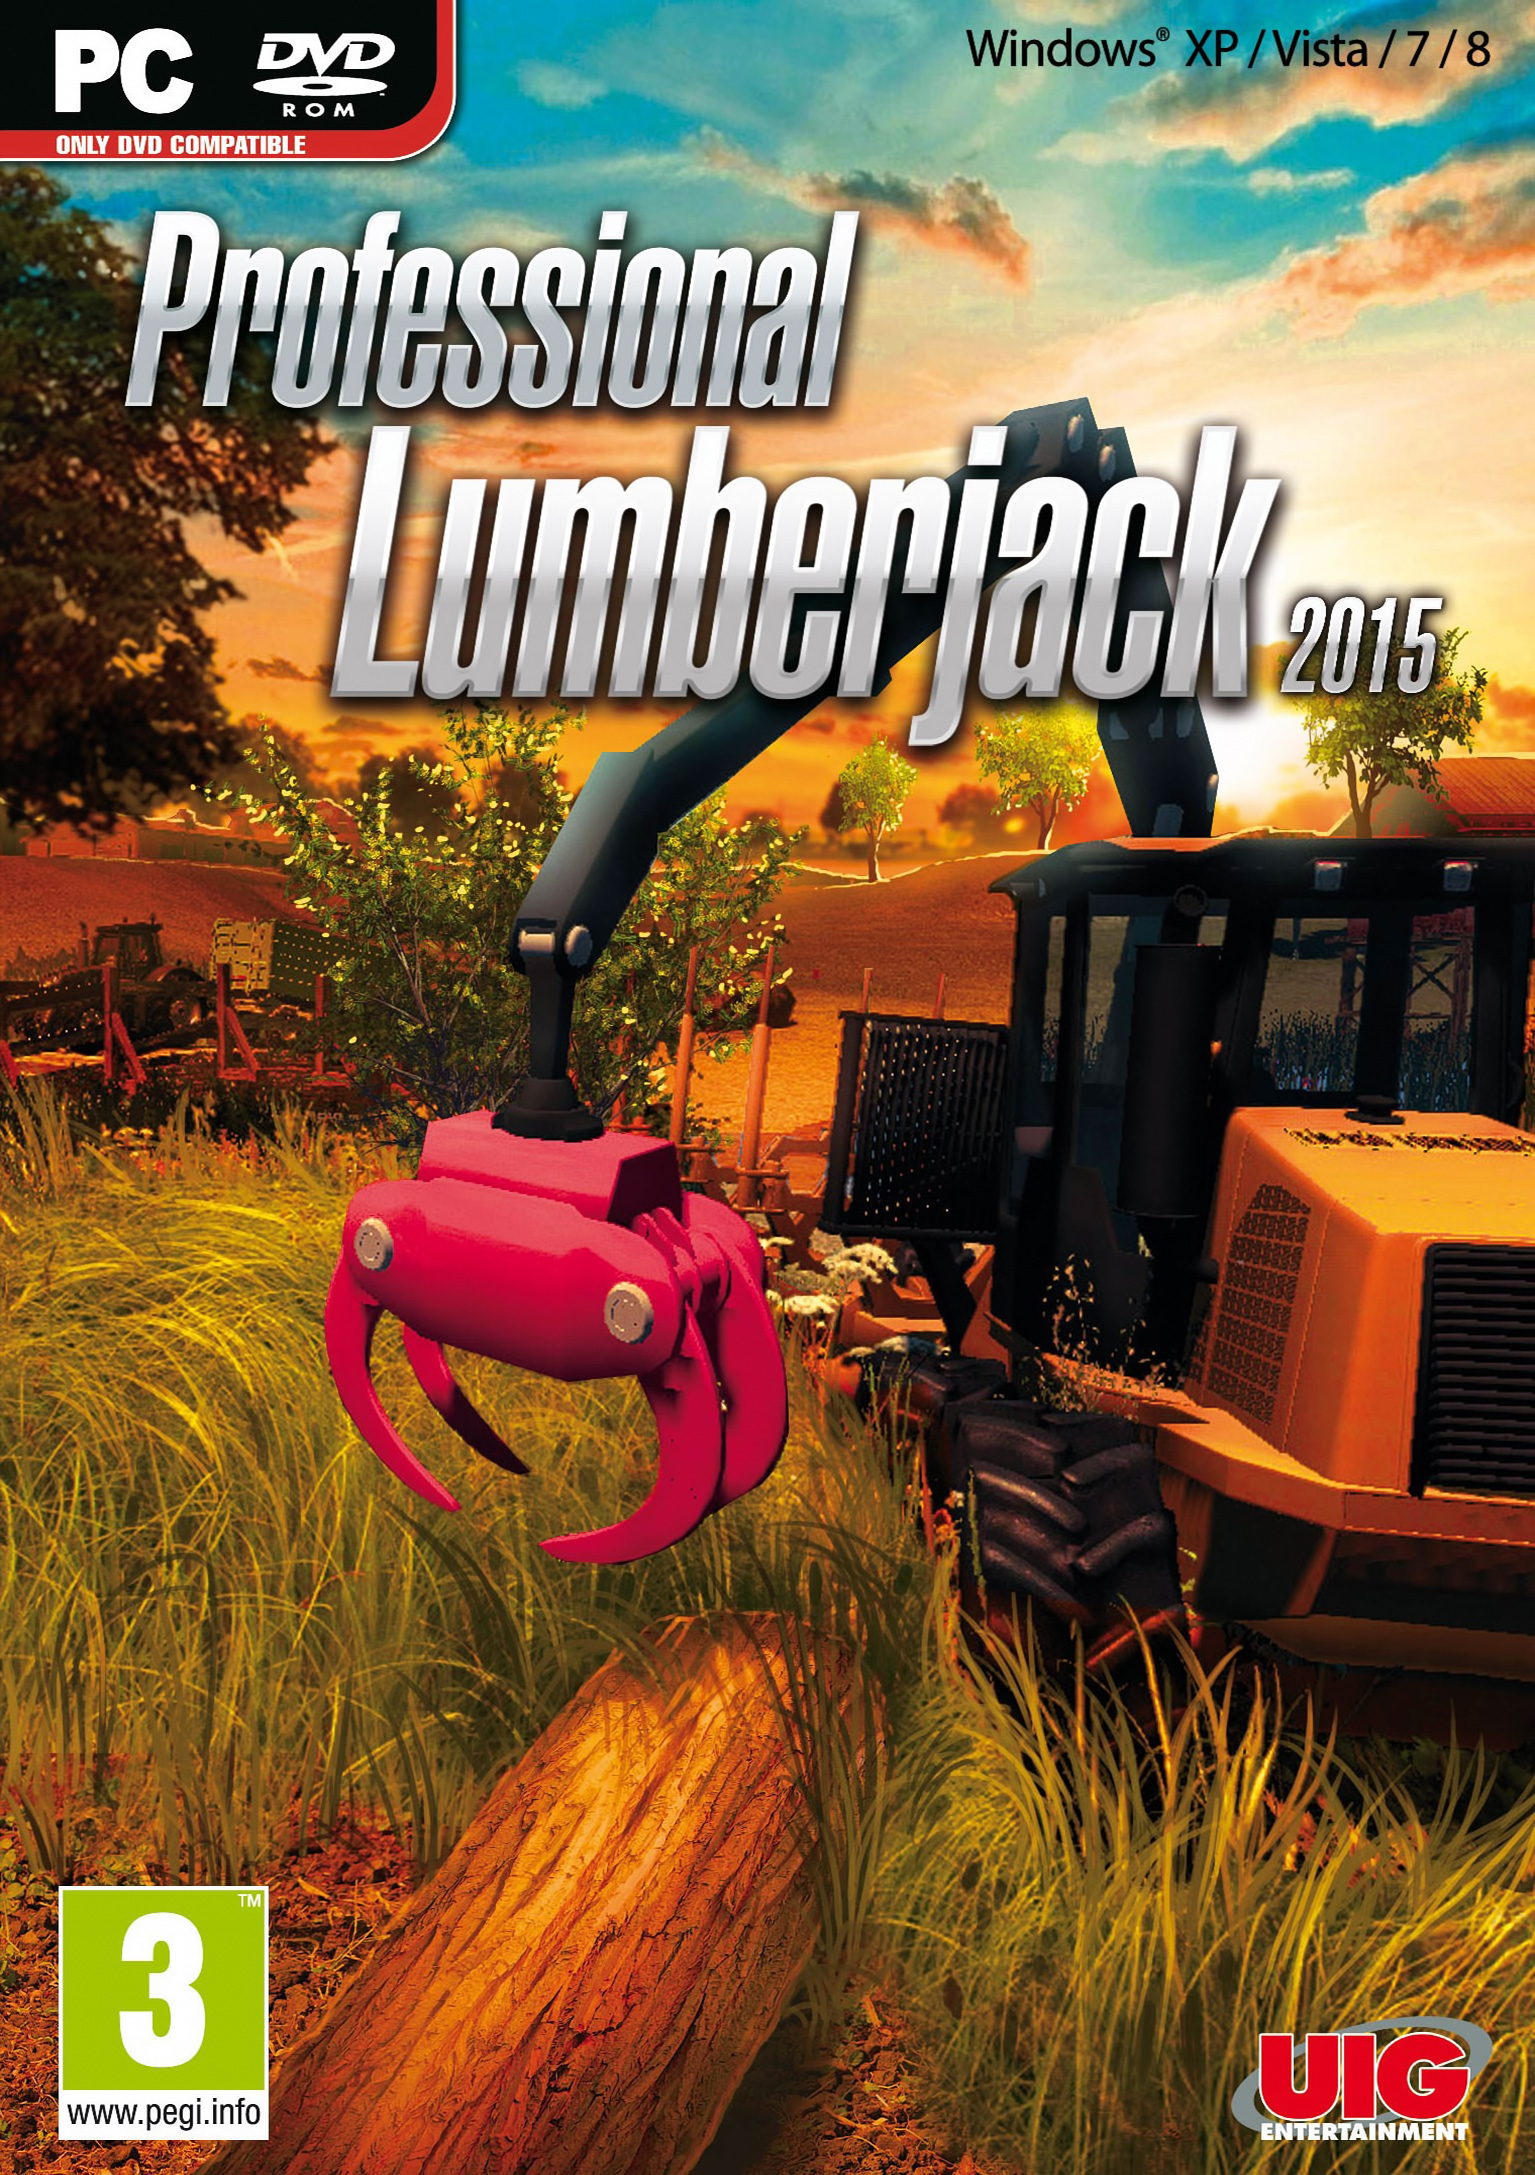 Professional Lumberjack 2015 - predn DVD obal